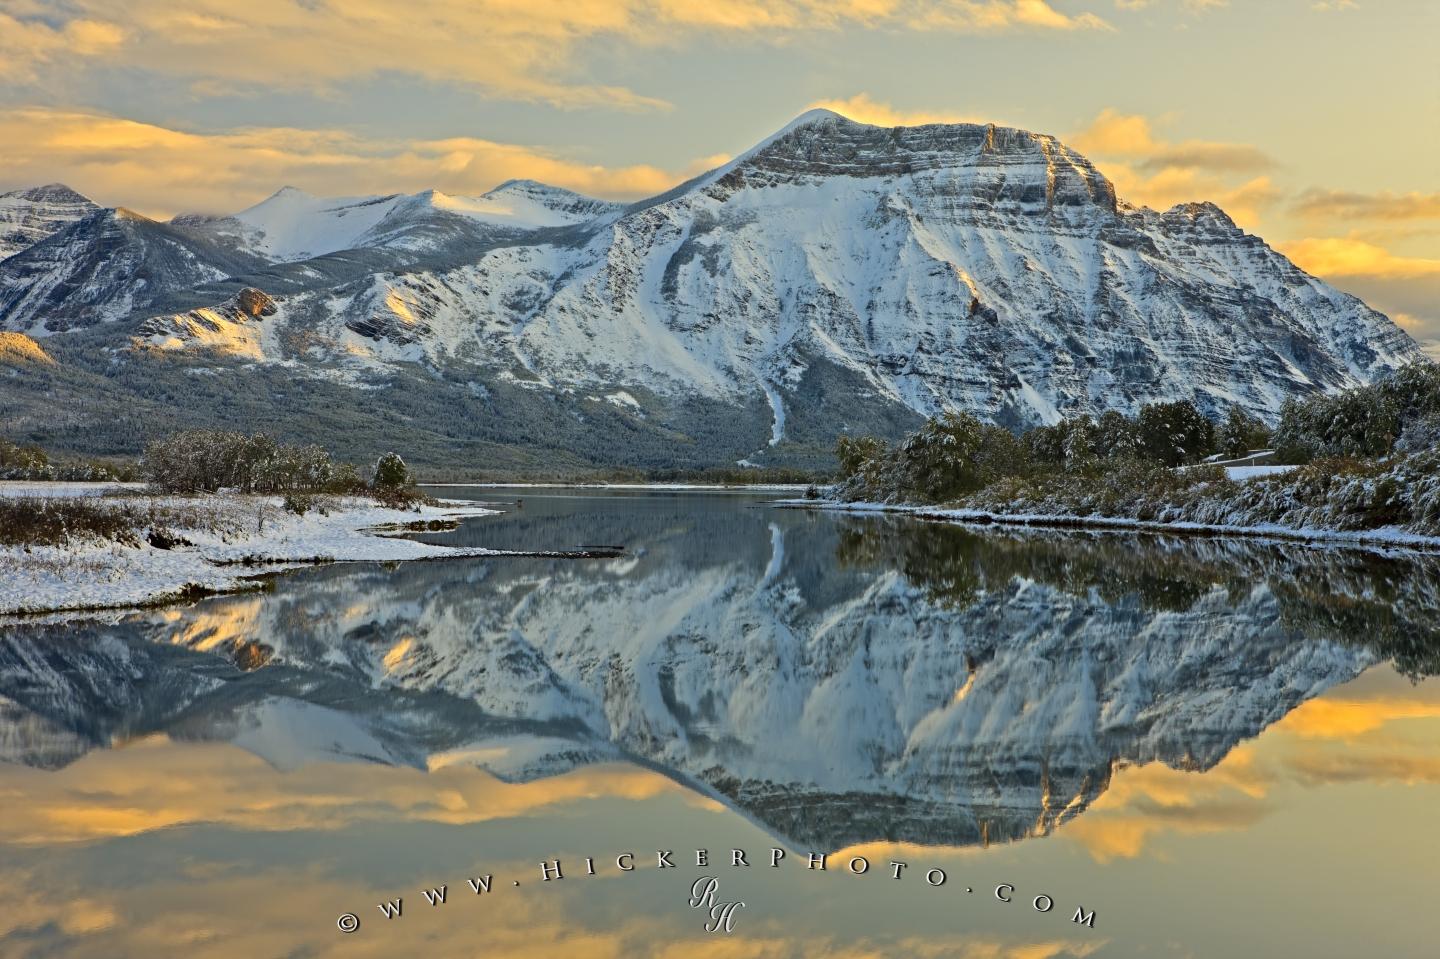 Free wallpaper background: Winter Landscape Mountain Reflections